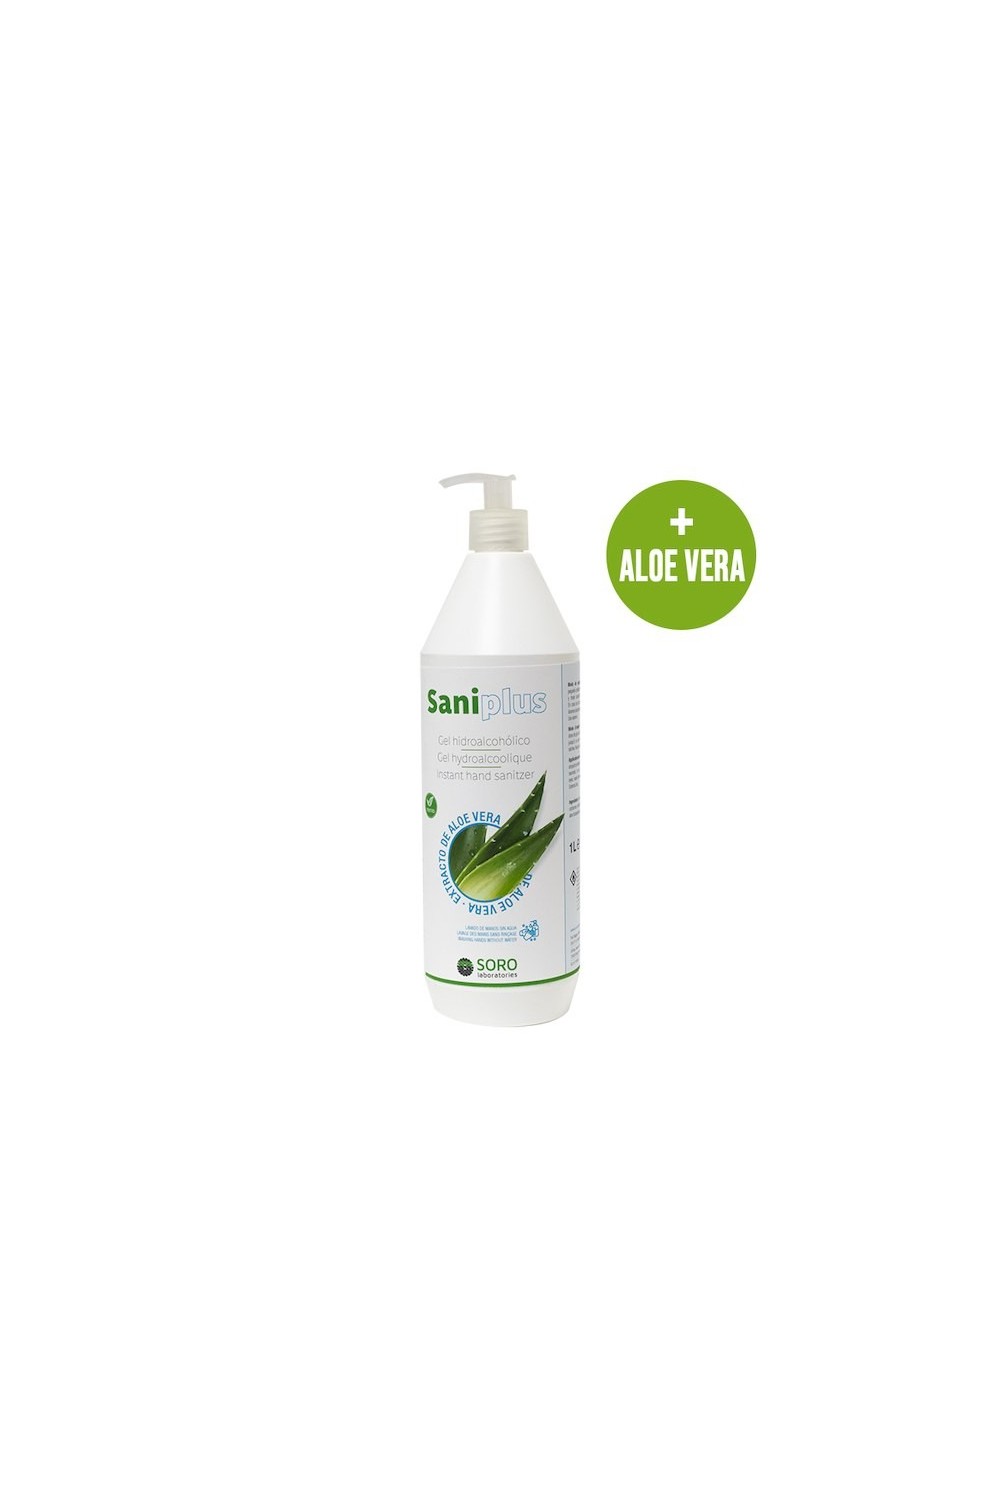 SANIPLUS - Hydroalcoholic Hand Gel Sanitizer With Aloe Vera 1 Litre